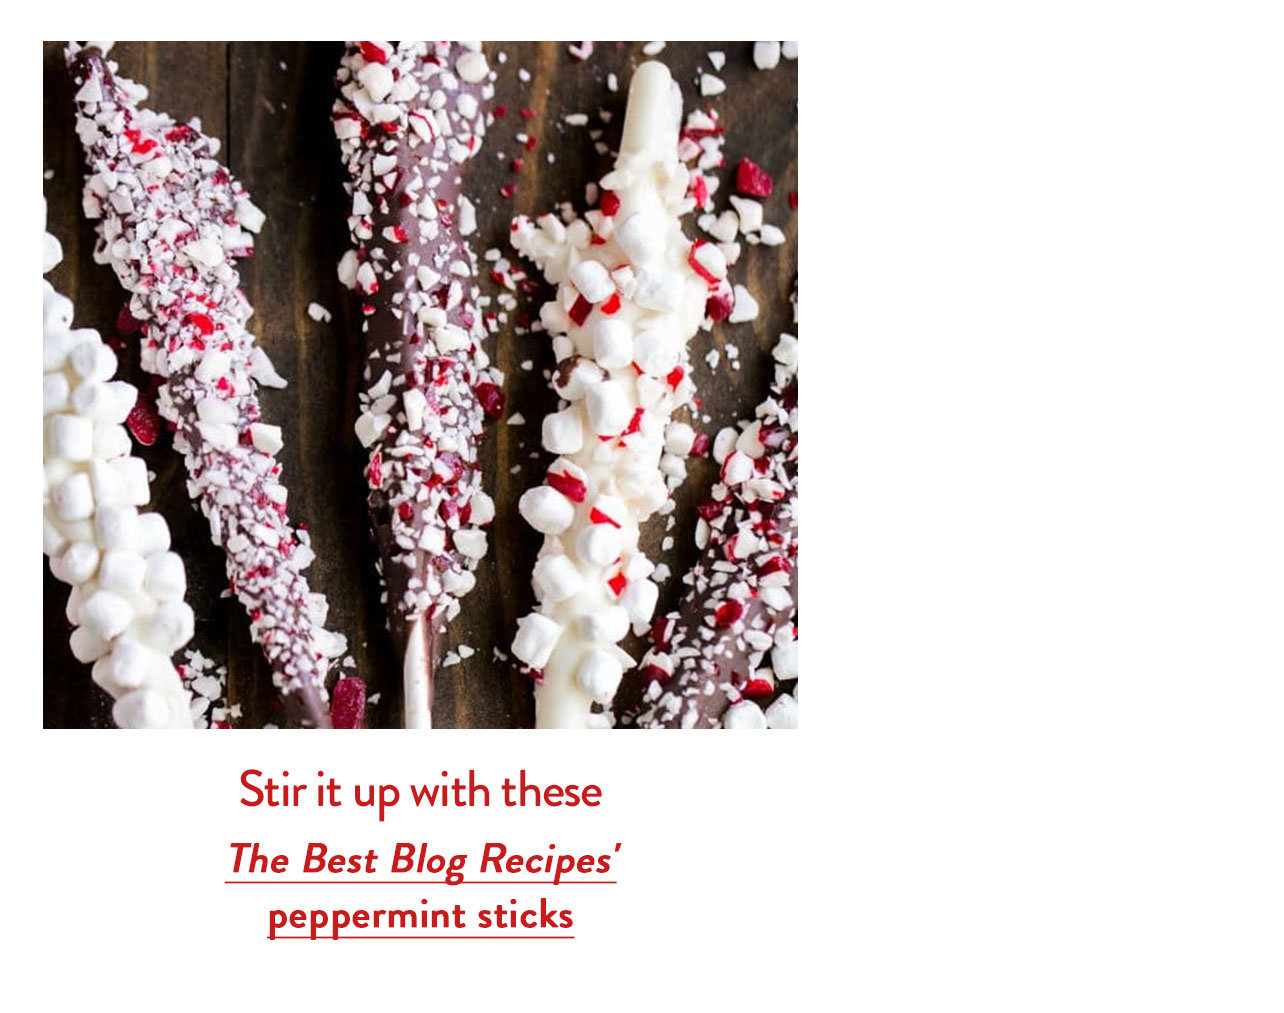 The Best Blog Recipes' peppermint sticks